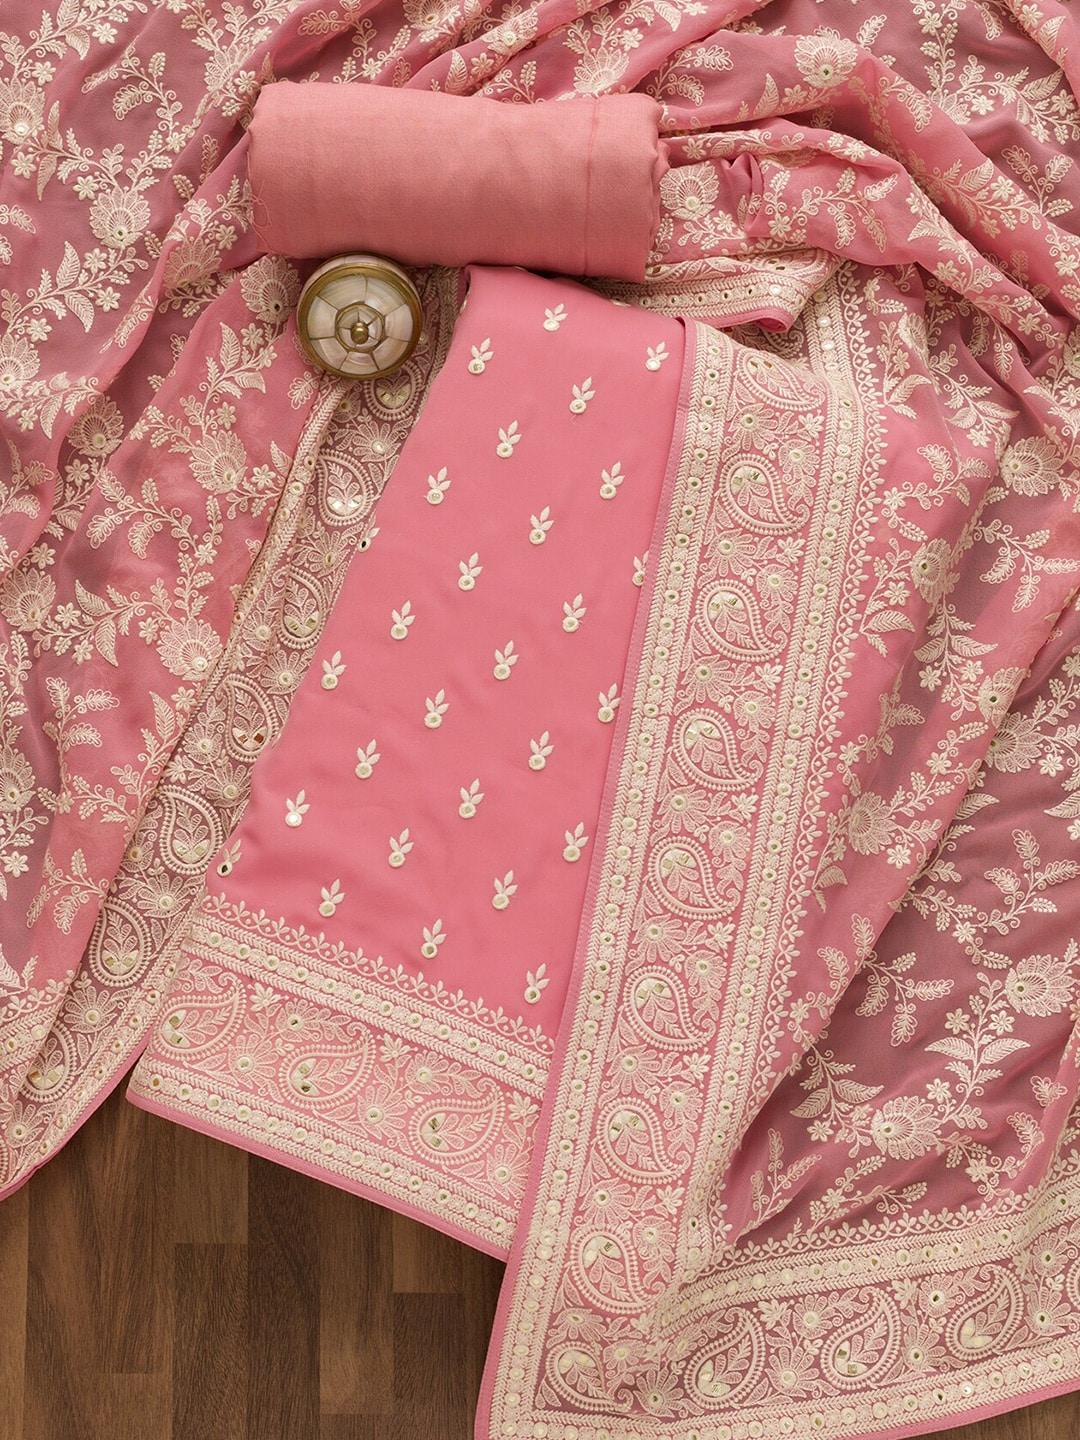 Koskii Embroidered Semi-Stitched Dress Material